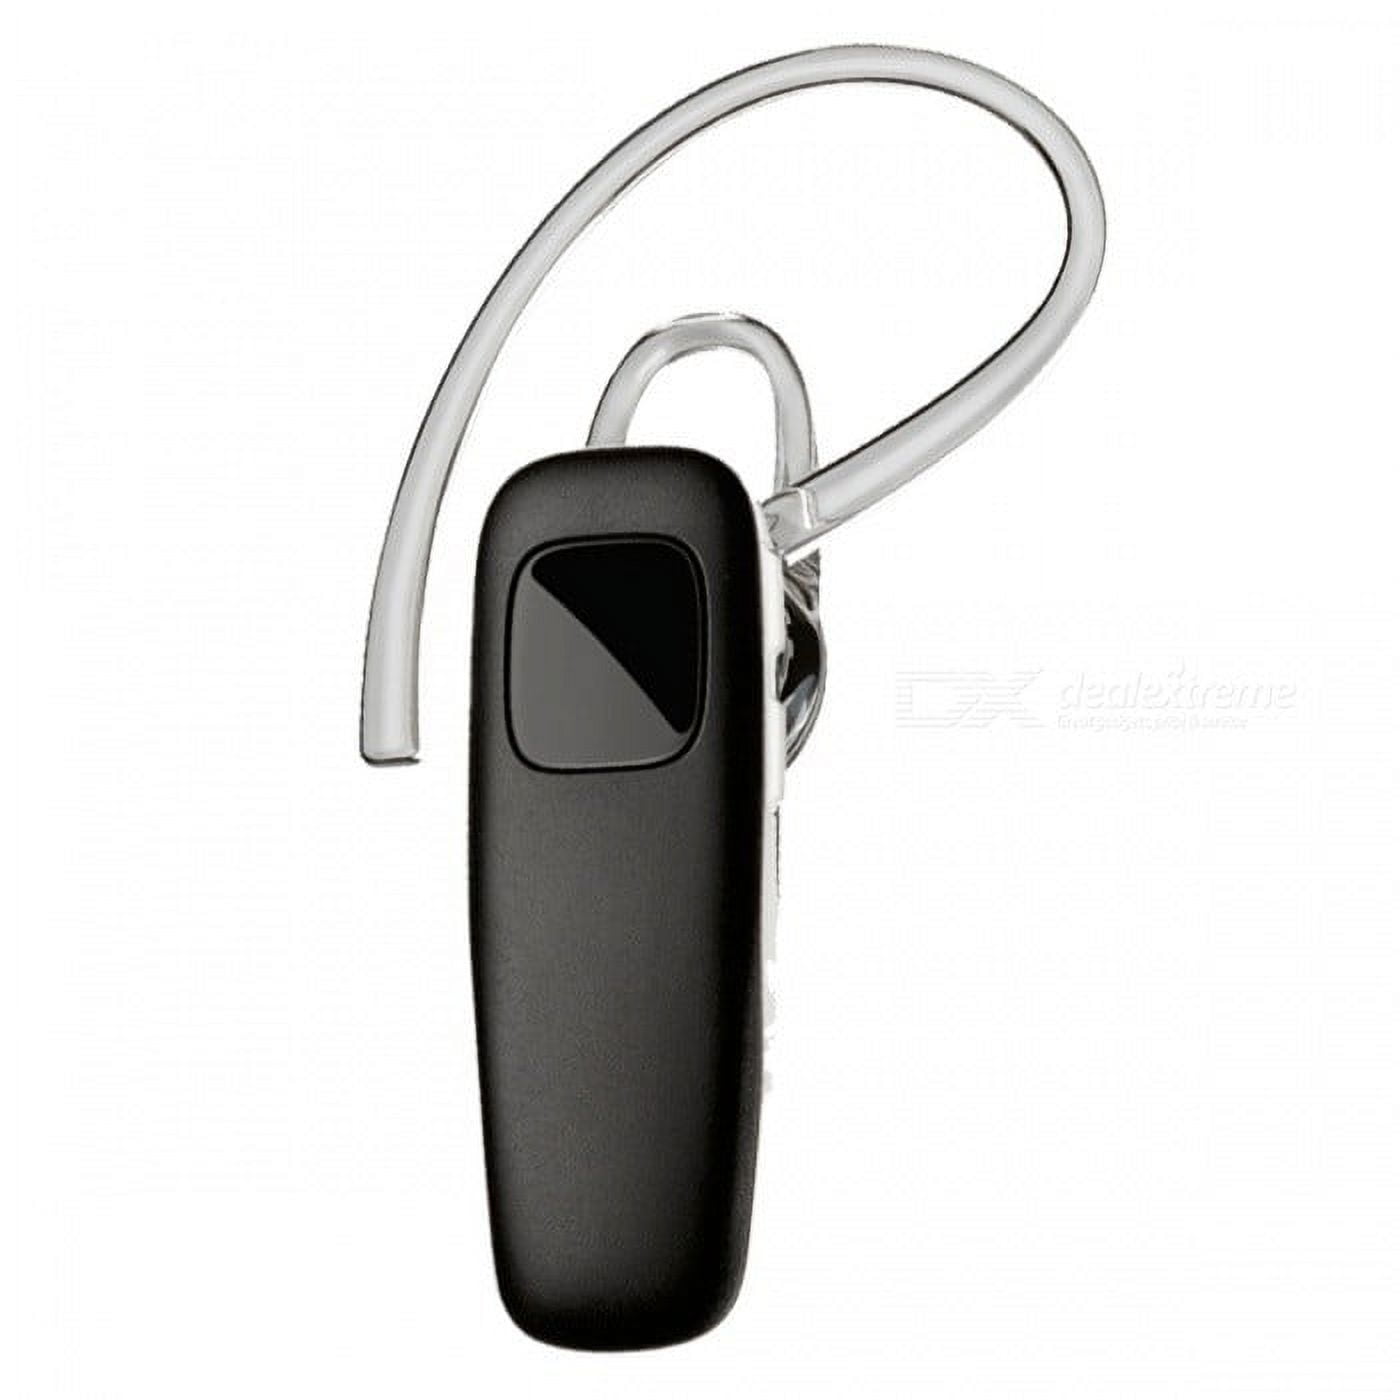 Pre-Owned Plantronics M70 Mobile Bluetooth Headset - Black (Refurbished:  Good)